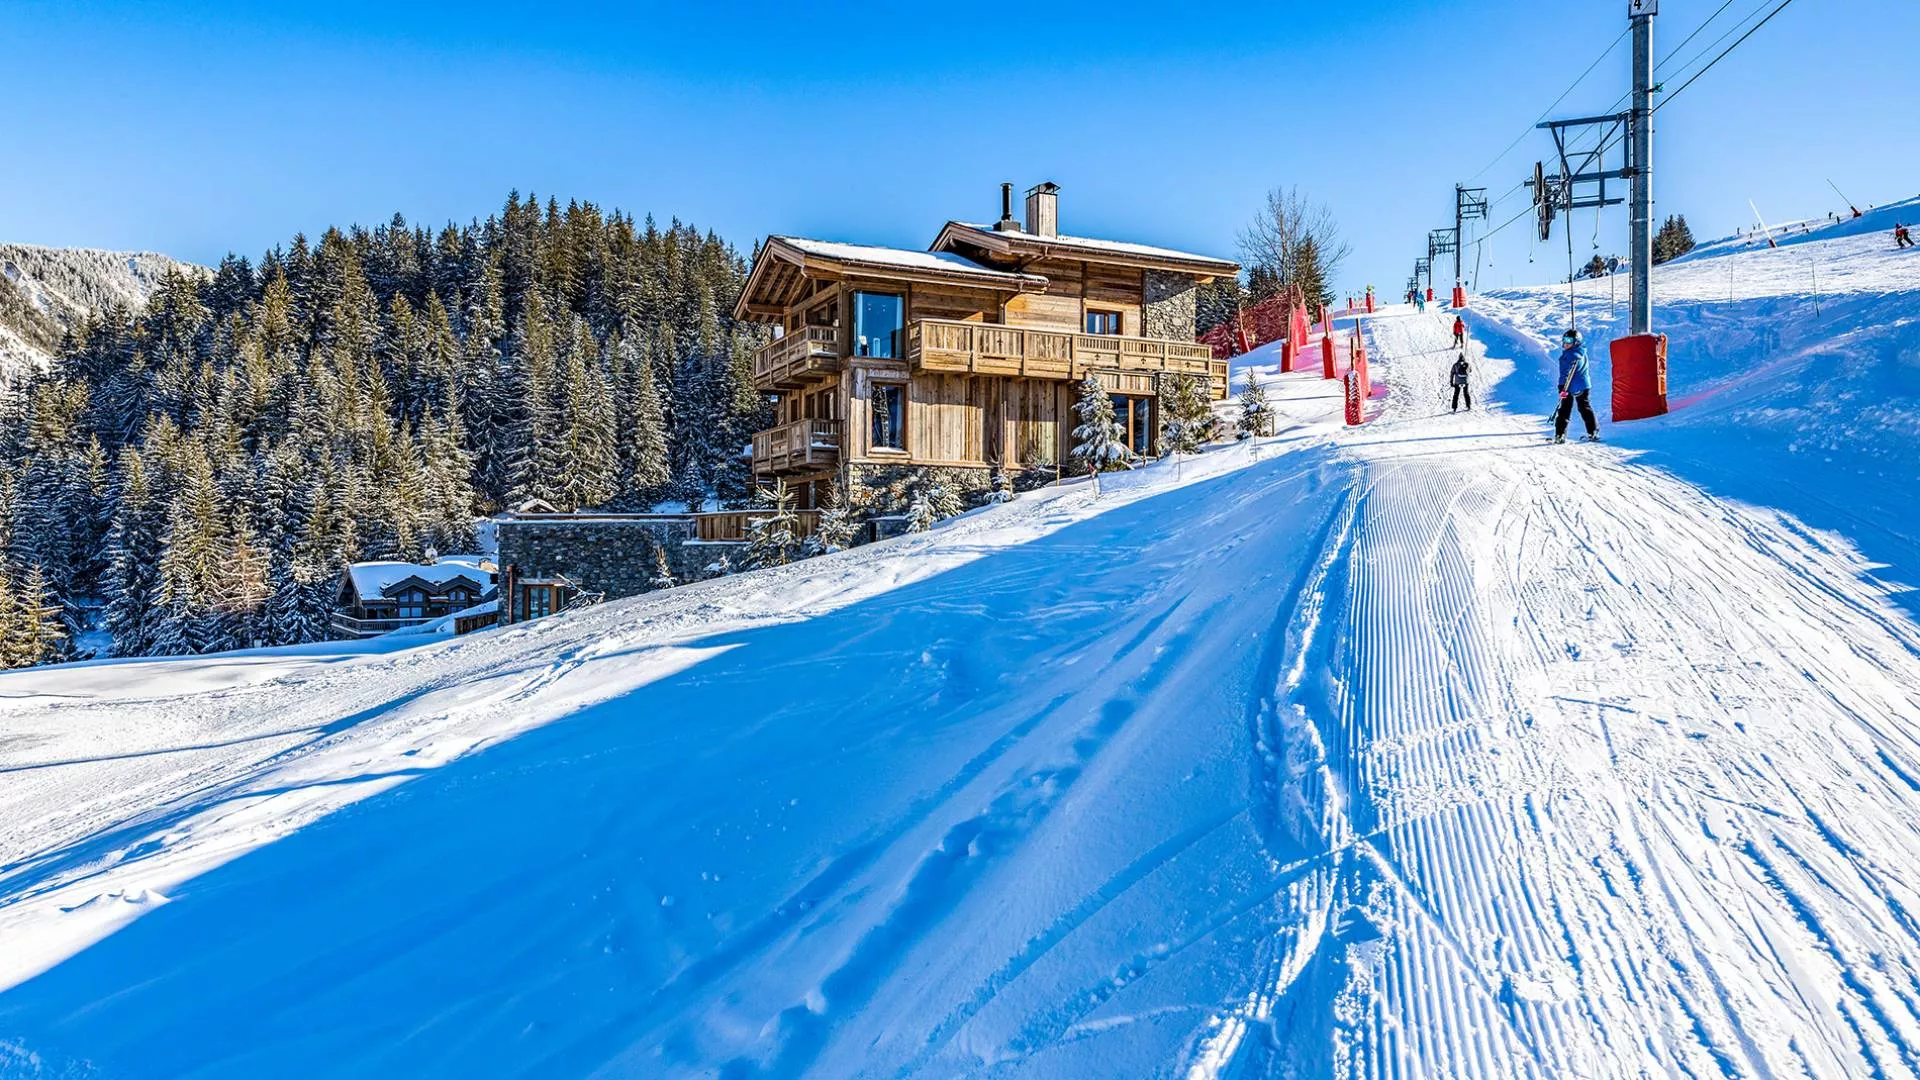 Blanca Nieve Ski and Snowboard School and Rental in Spain, Europe | Snowboarding,Skiing - Rated 1